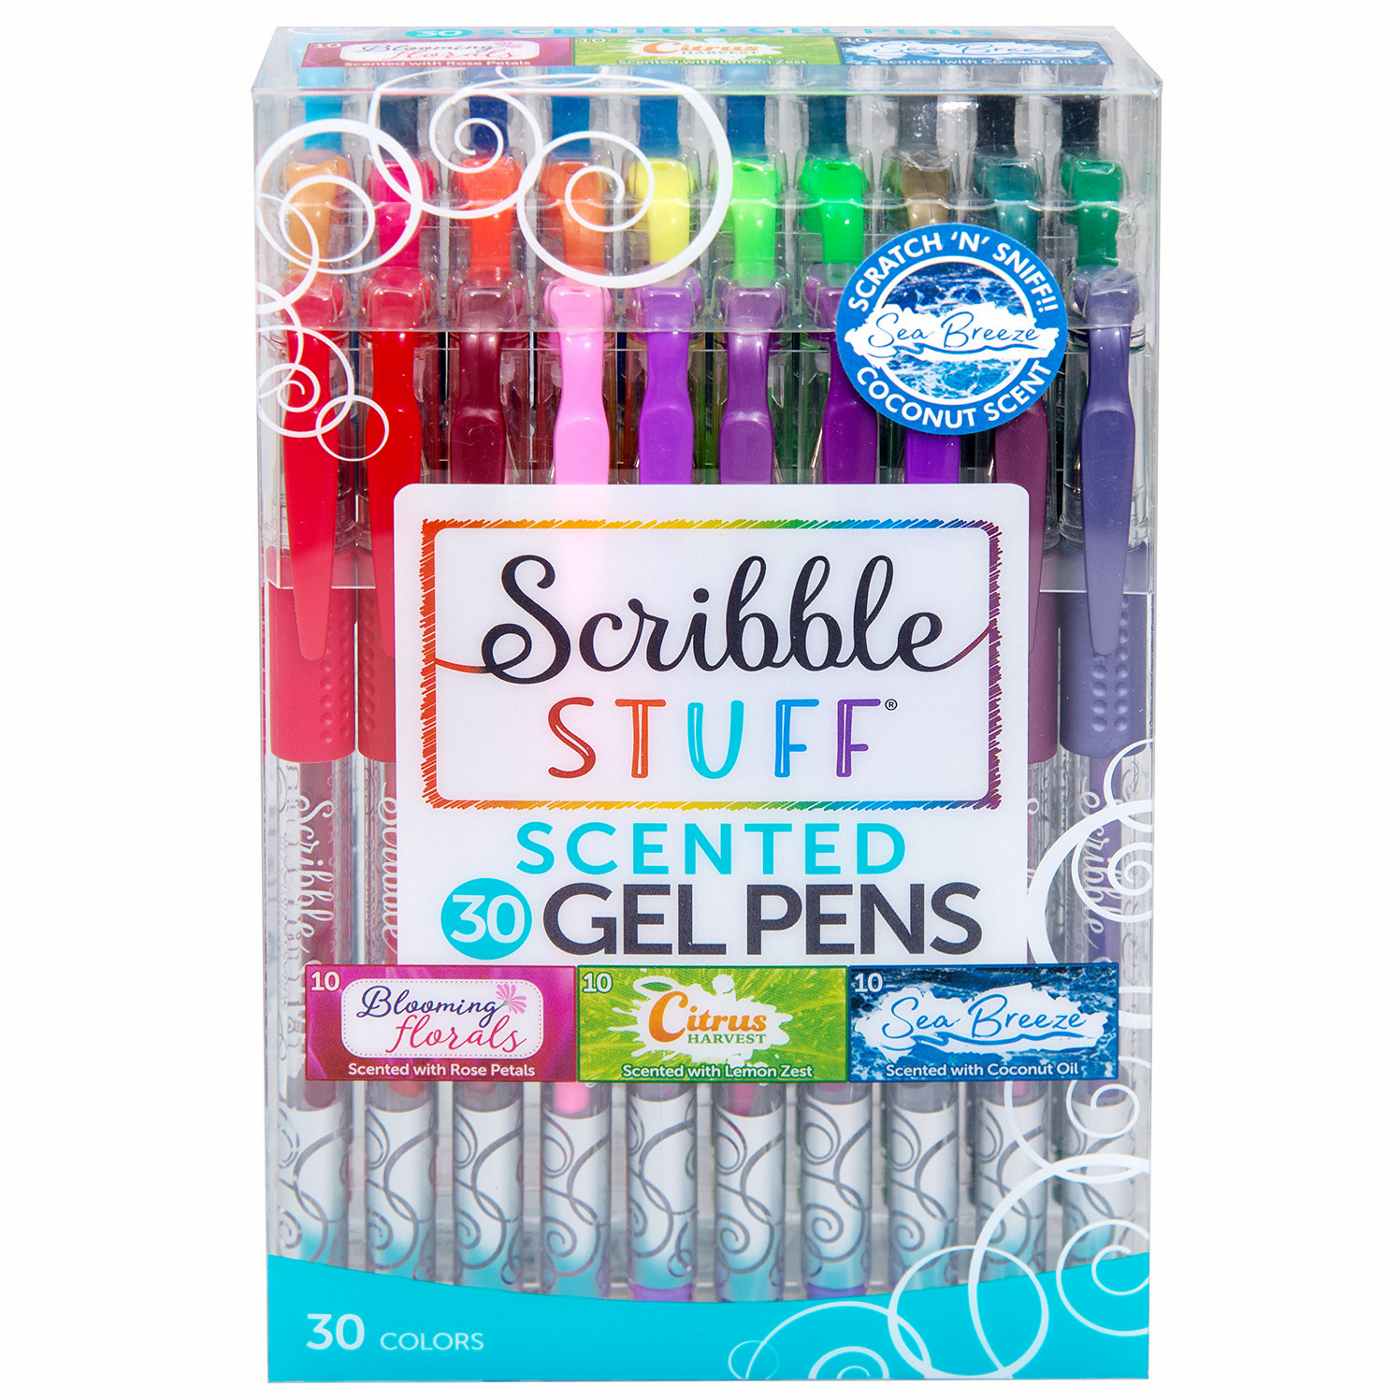 Scribble Stuff Felt Tip Pens and Gel Pens